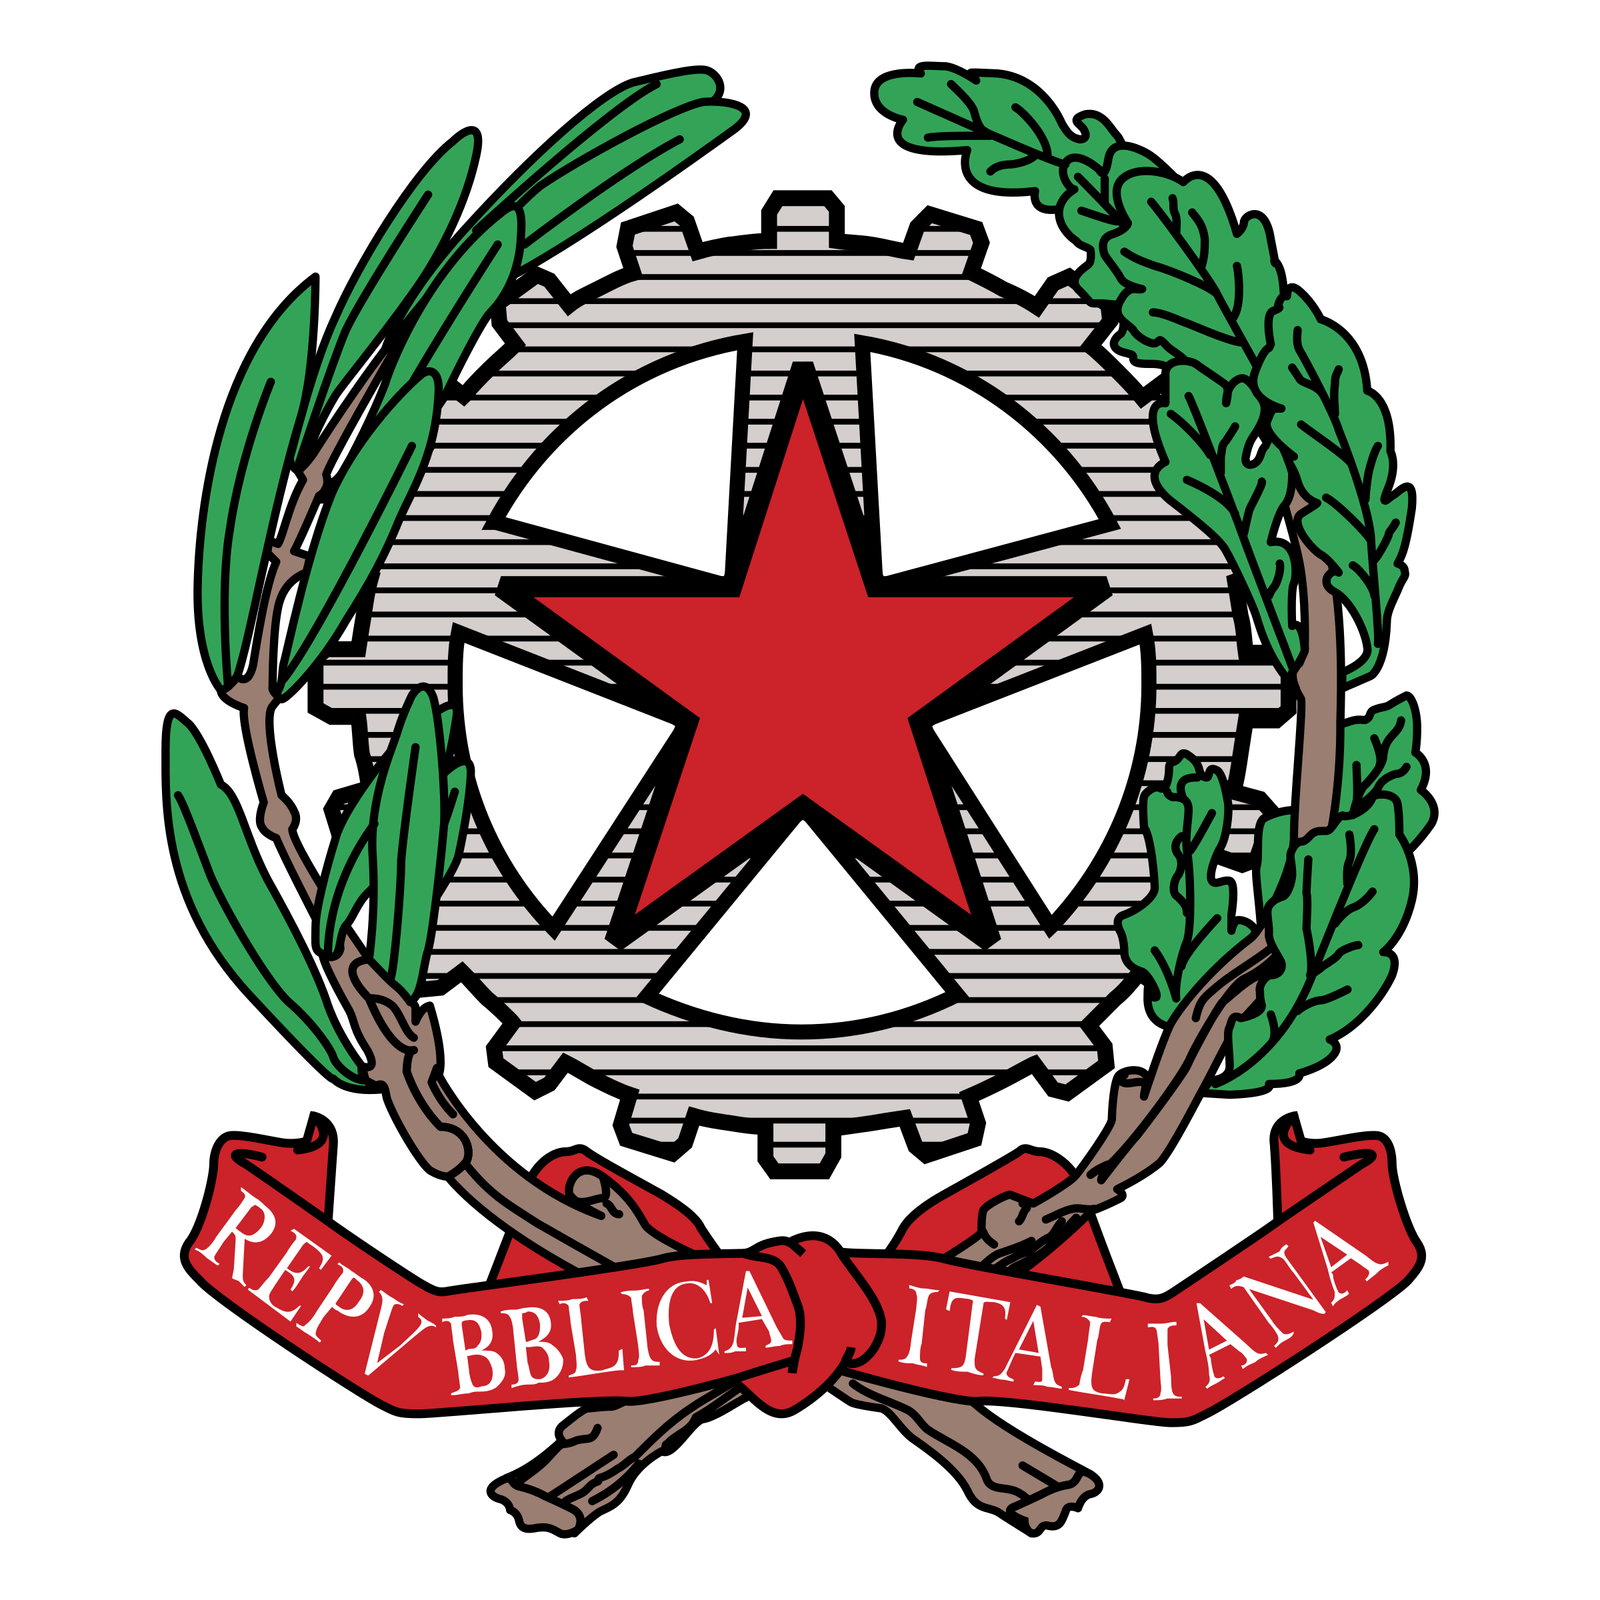 stemma-repubblica-italiana-png-6.png